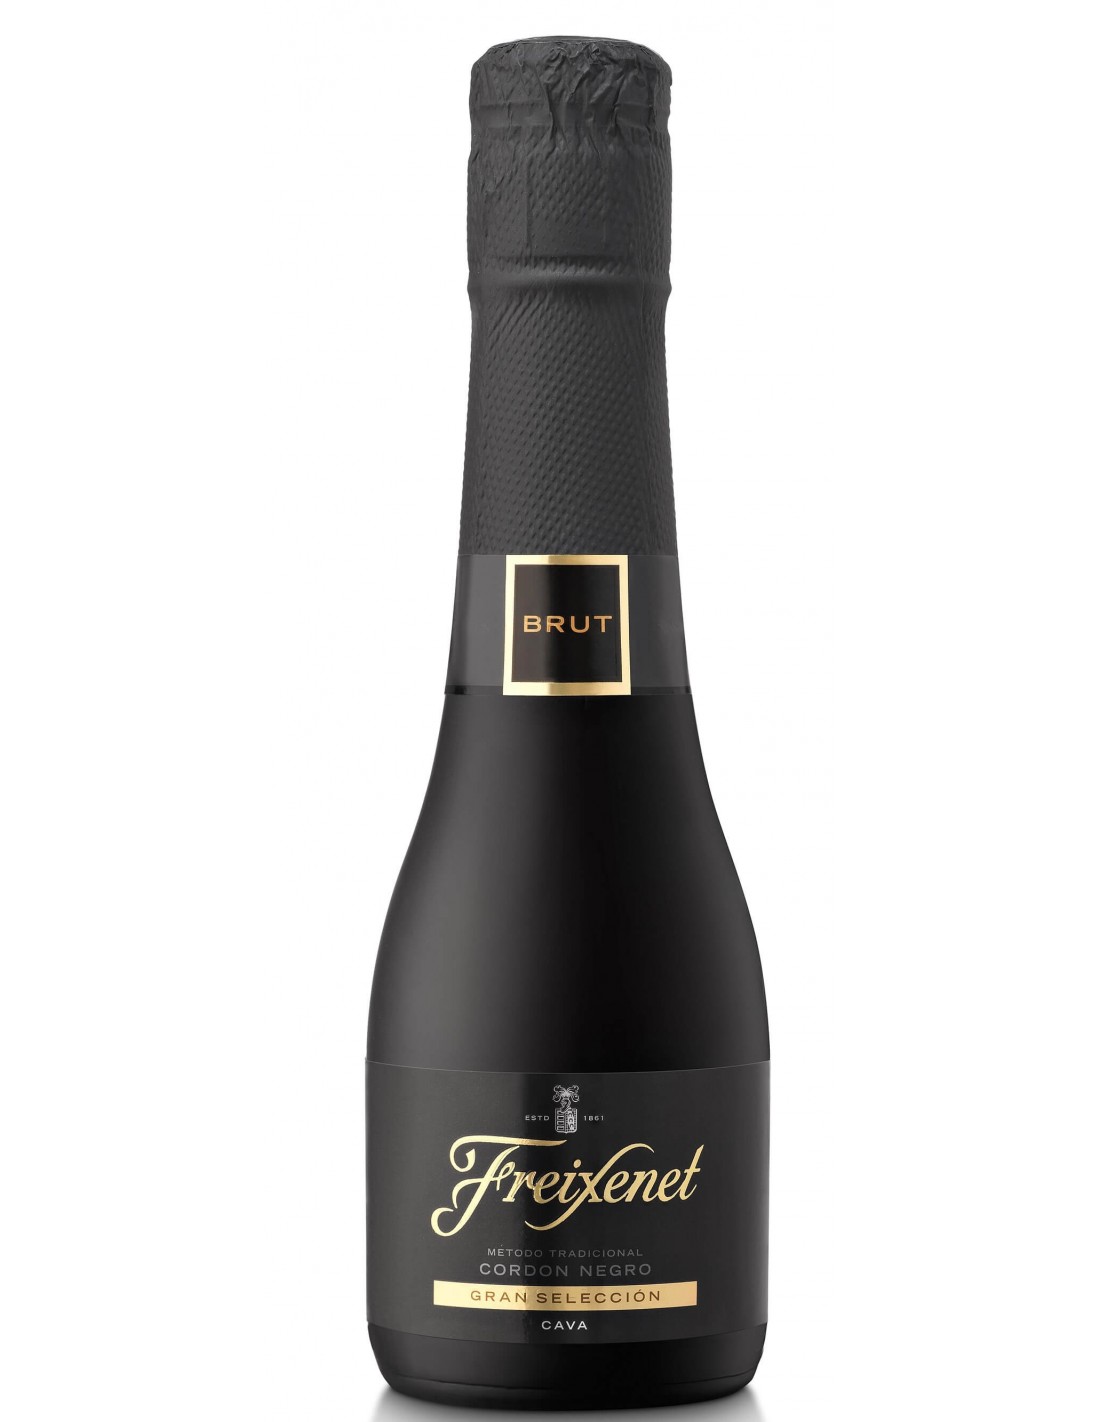 Vin spumant Freixenet Cordon Negro Brut, 0.2L, 11.5% alc., Spania alcooldiscount.ro